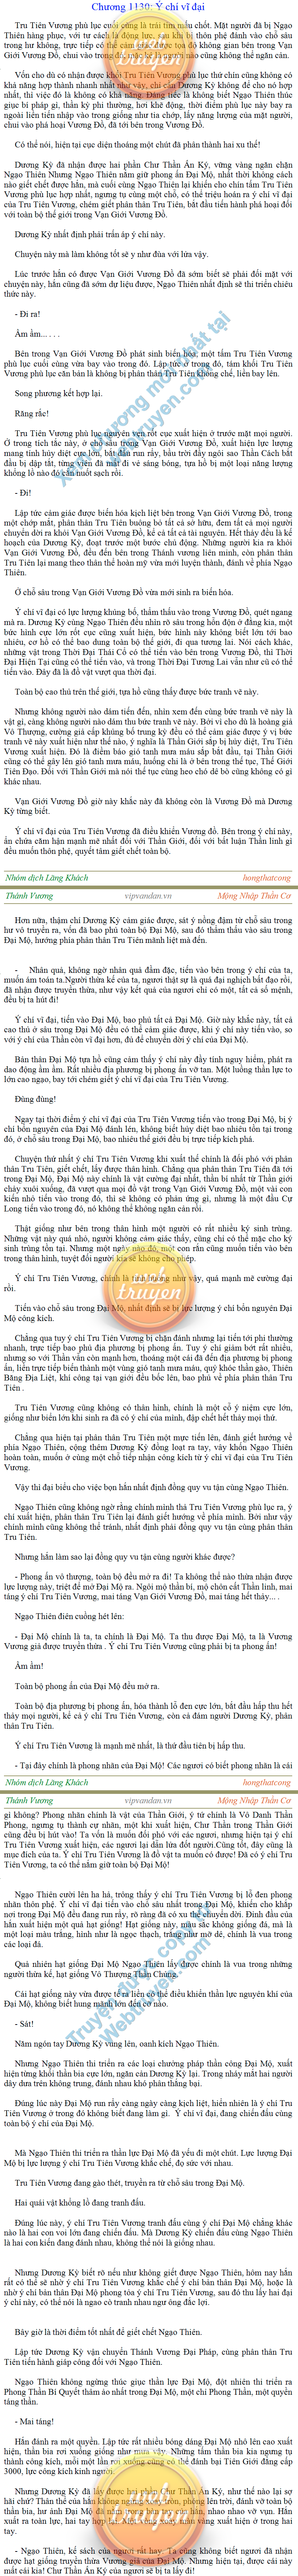 Thanh-vuong-1130.png